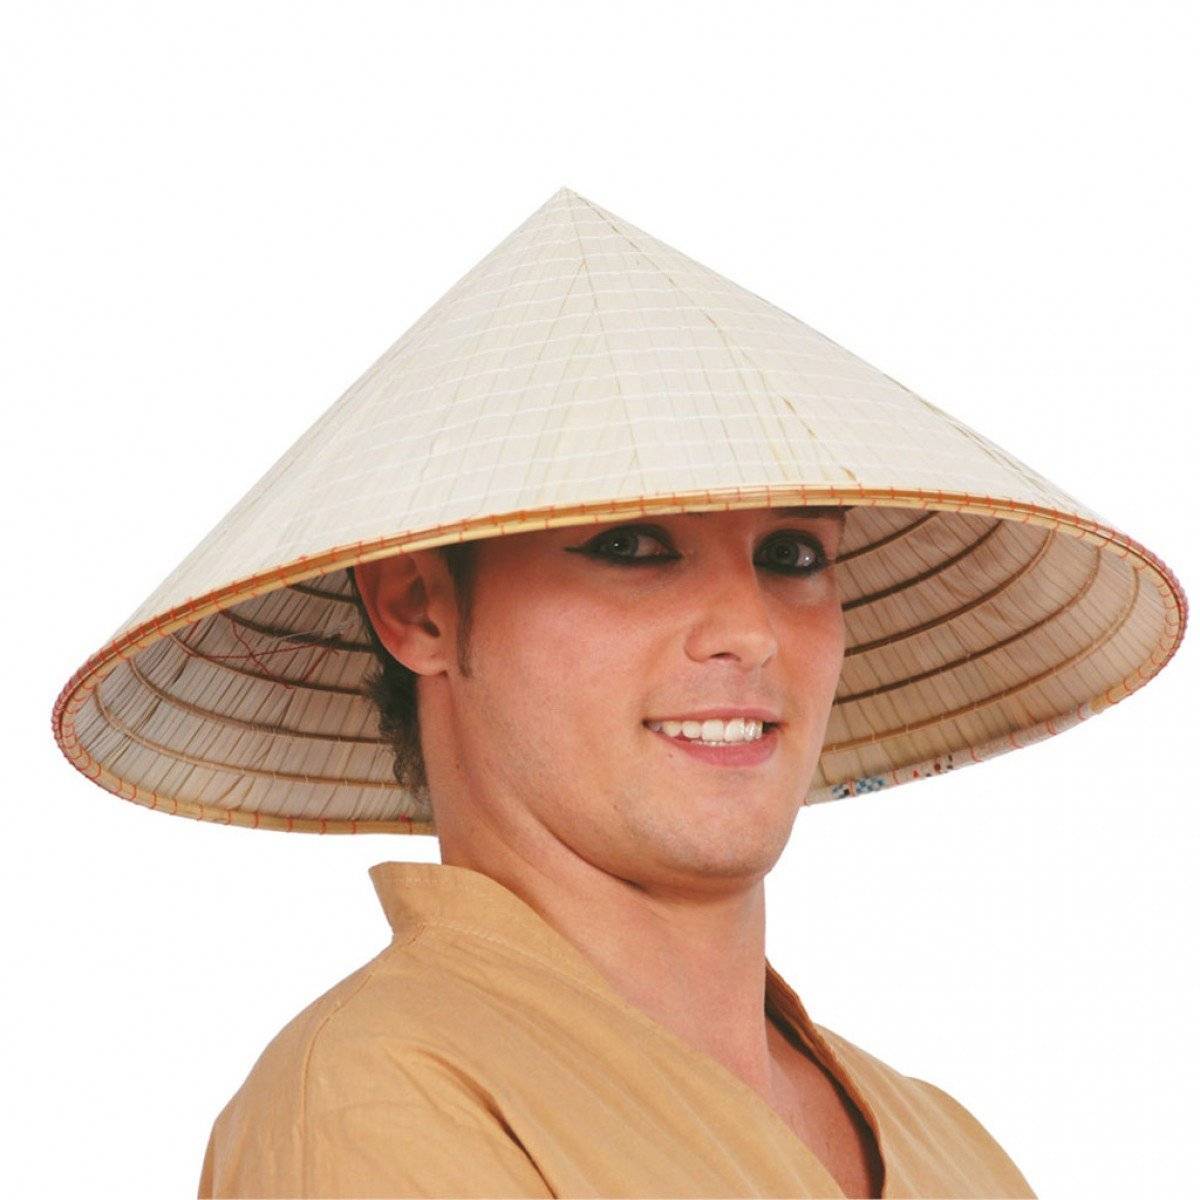 Bamboo hat. Шляпа амигаса бамбуковая. Шляпа амигаса Вьетнам. Бамбуковая шляпа доули. Японская соломенная шляпа амигаса.